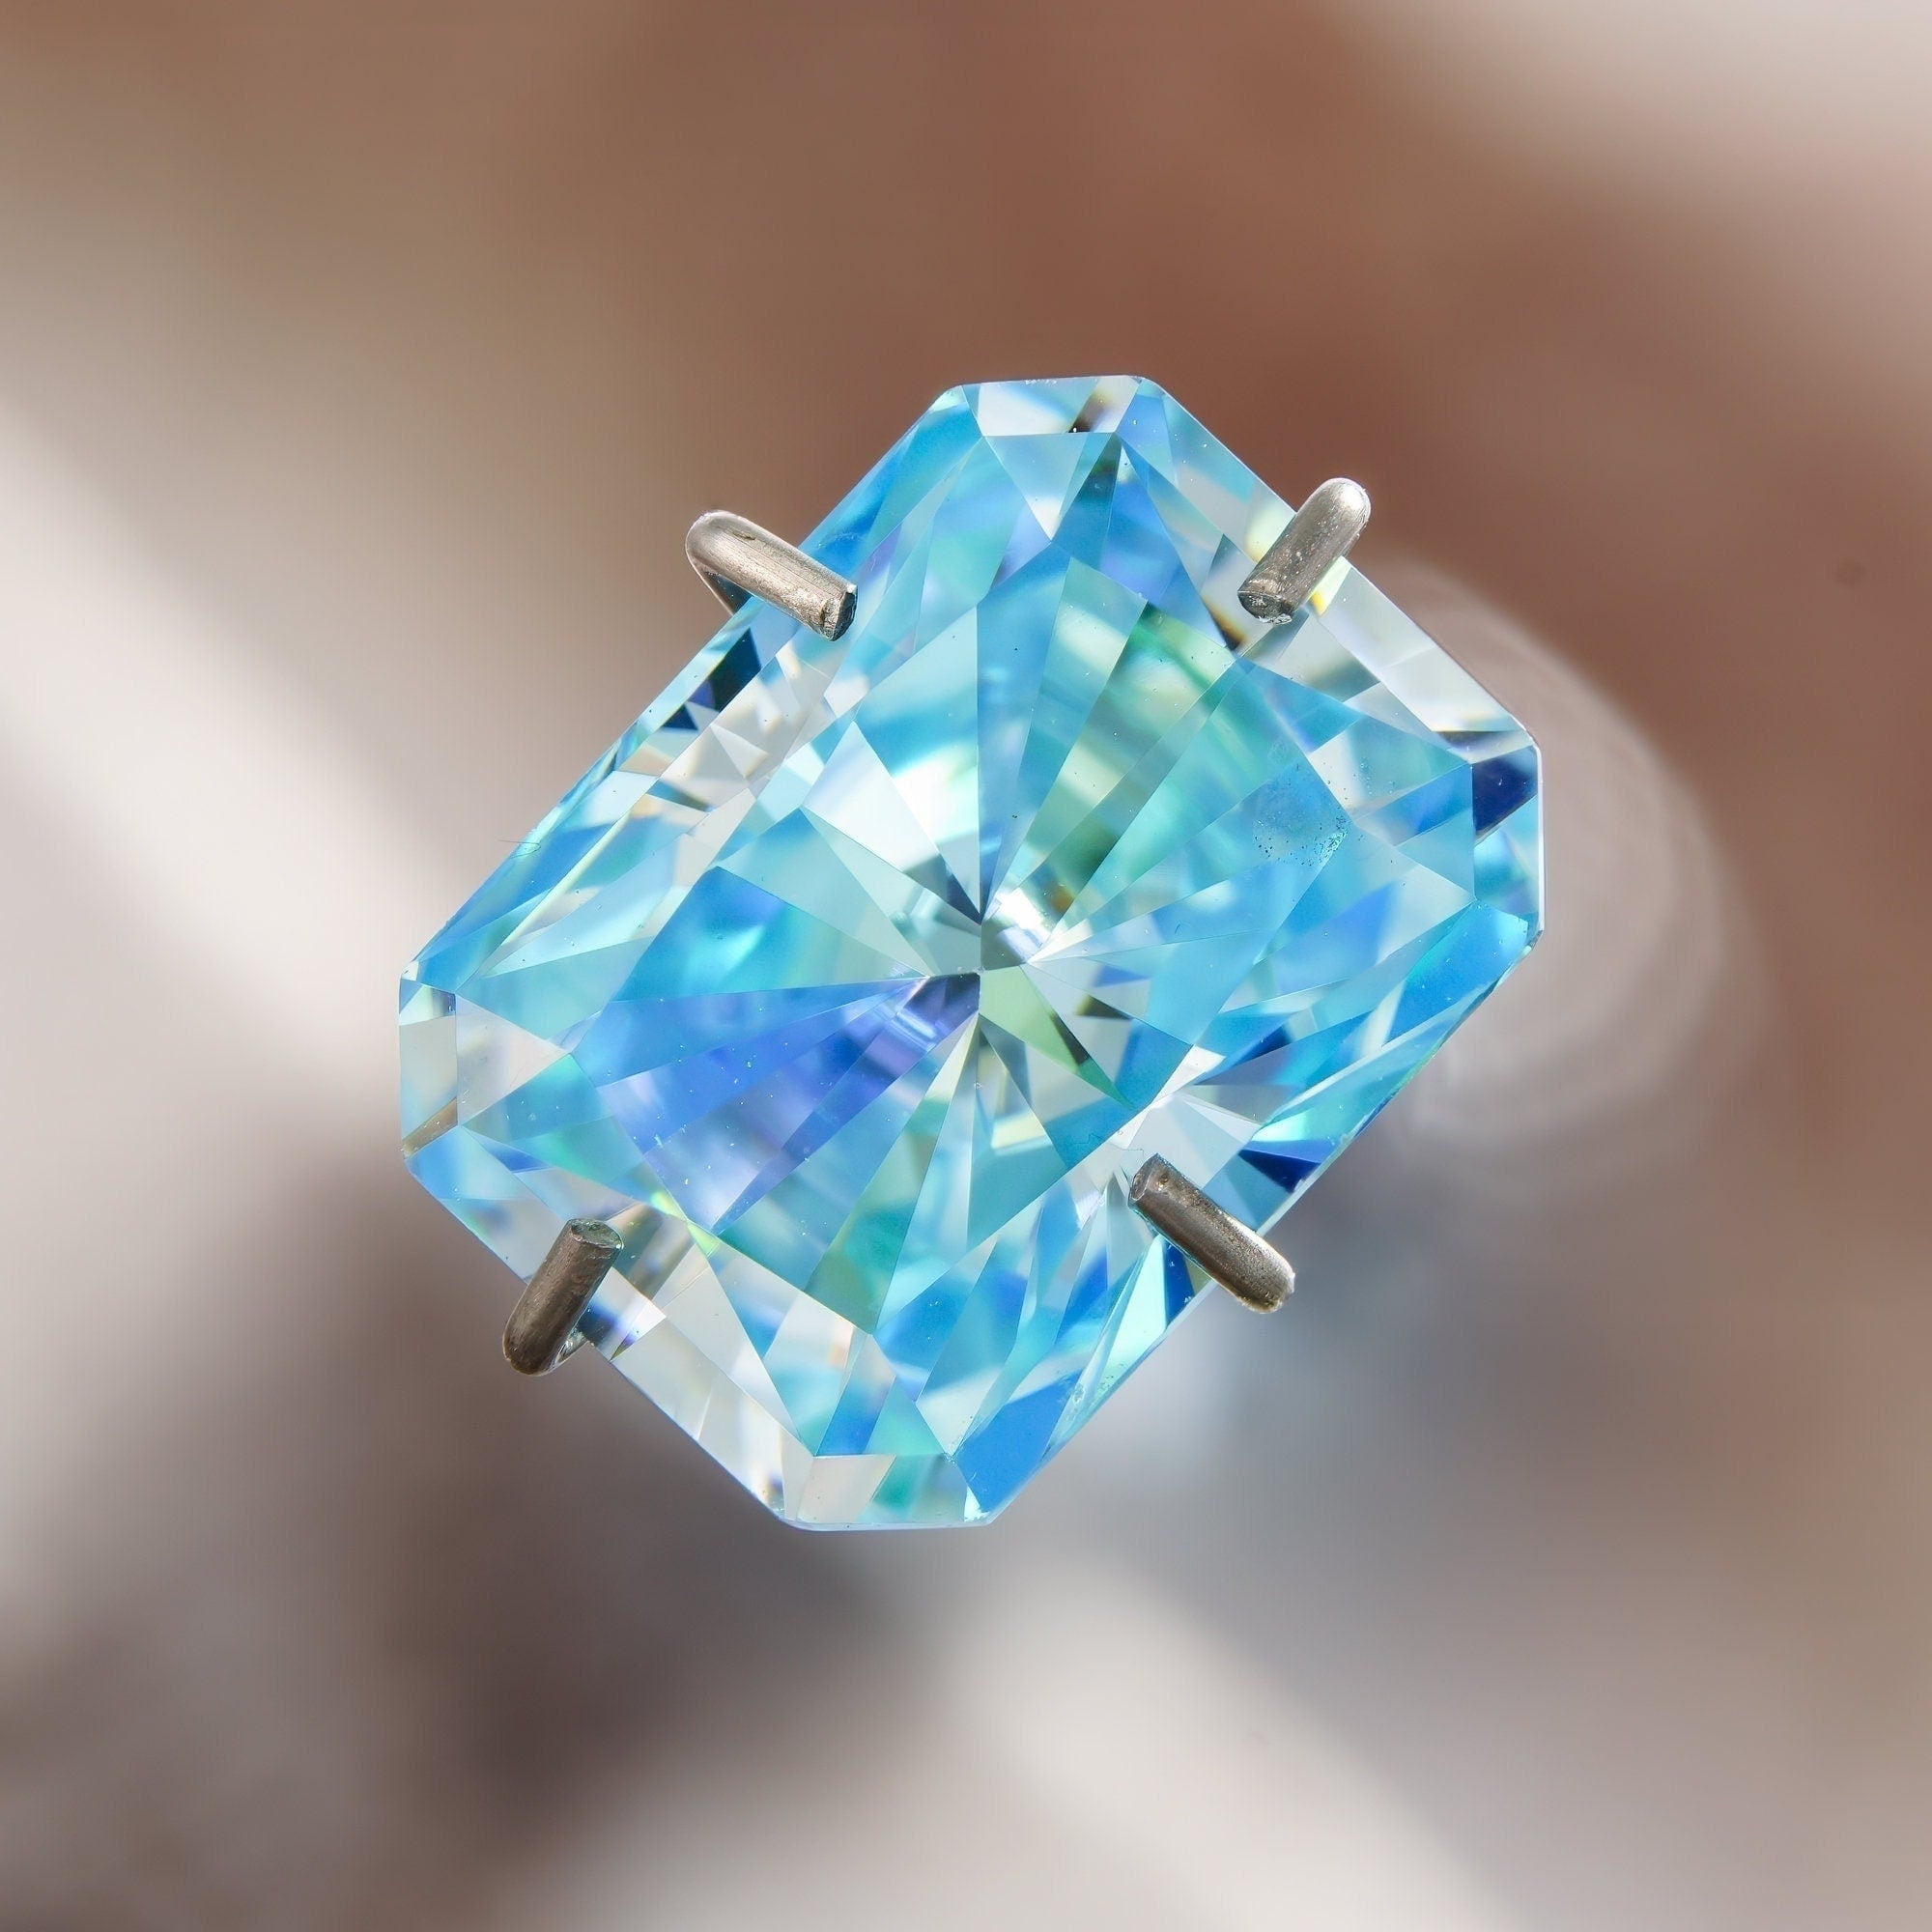 Certified vvs1 sea blue radiant cut moissanite - 6x8mm, 2ct loose gemstone, gra certified